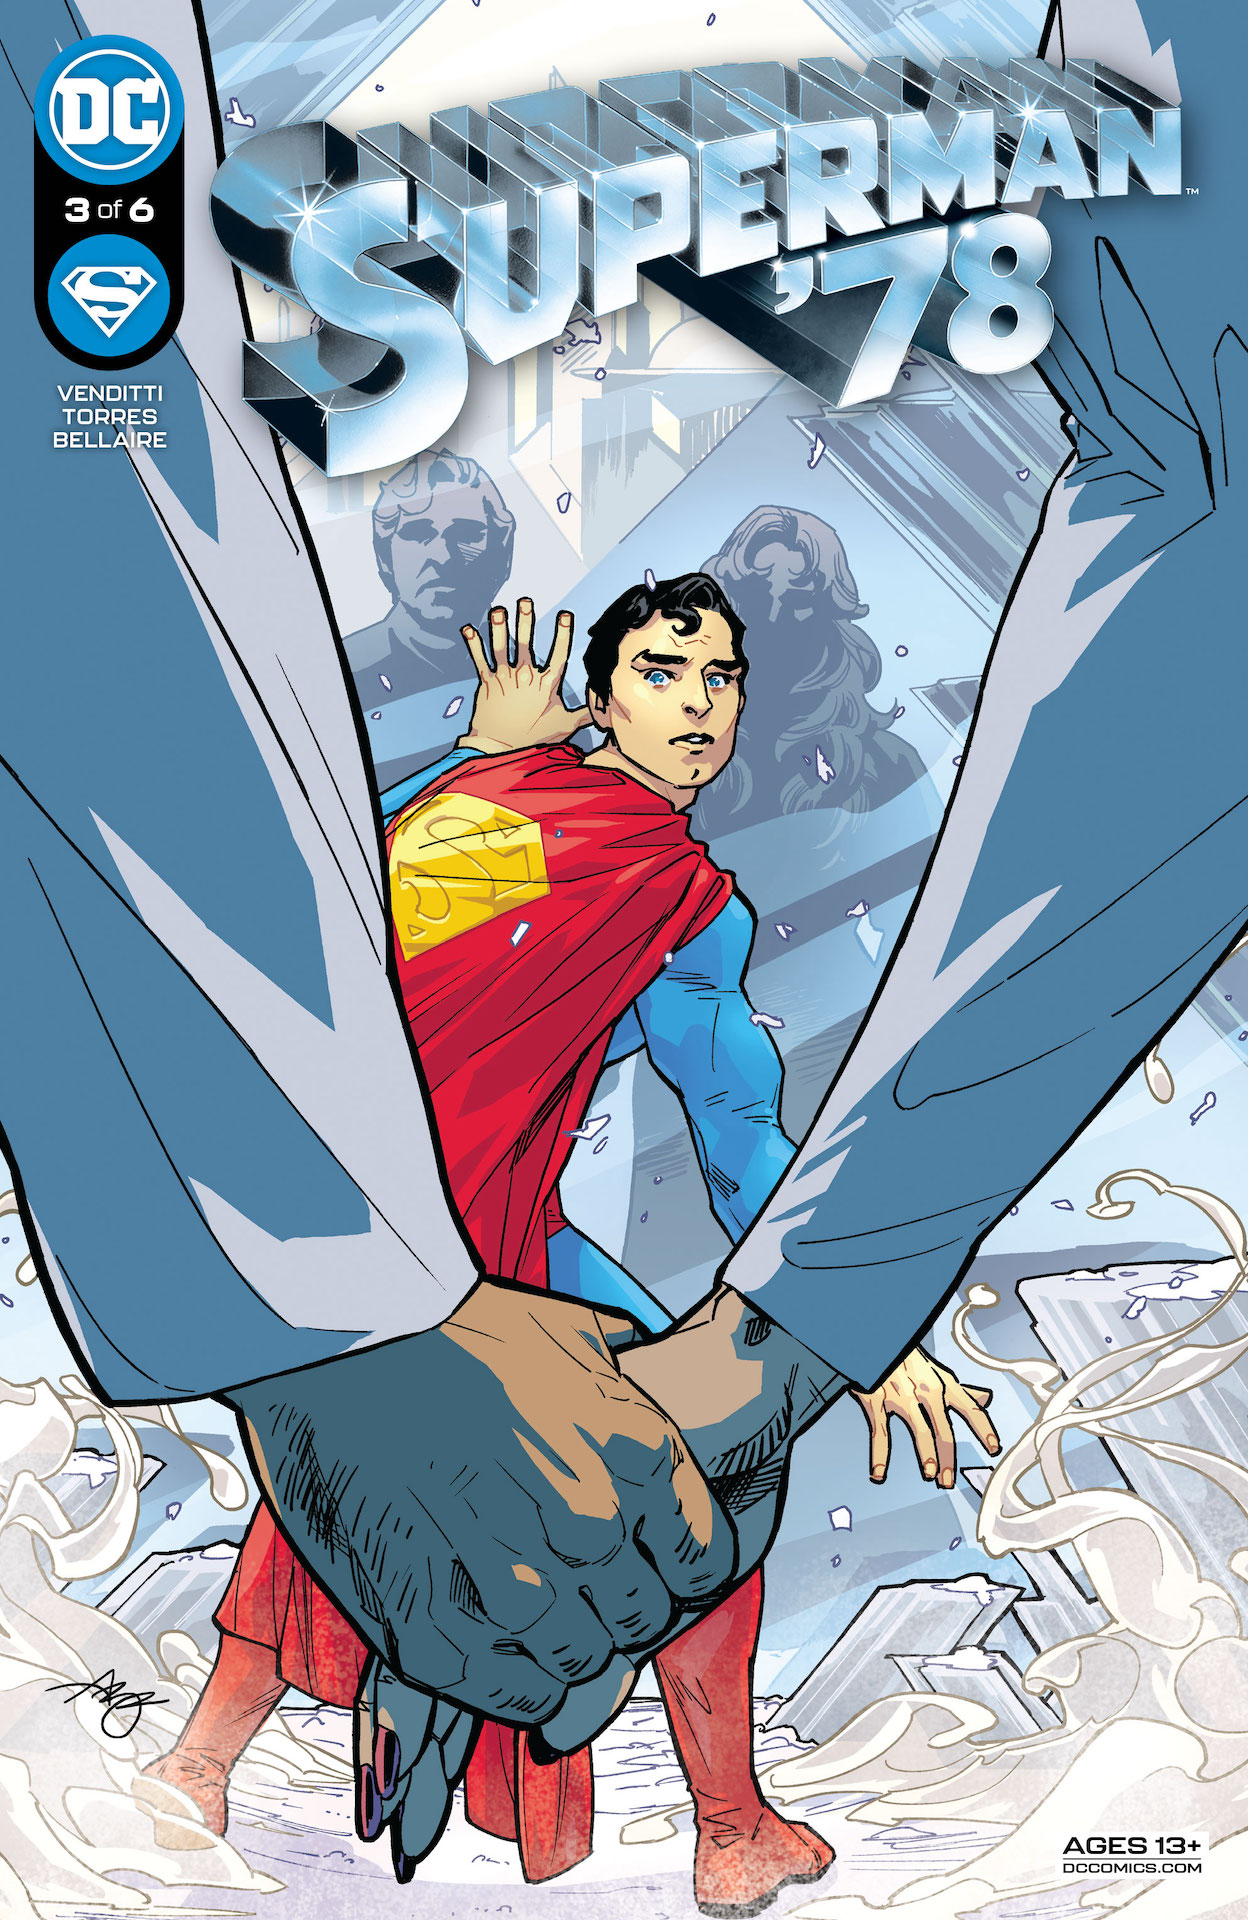 DC Preview: Superman 78 #3